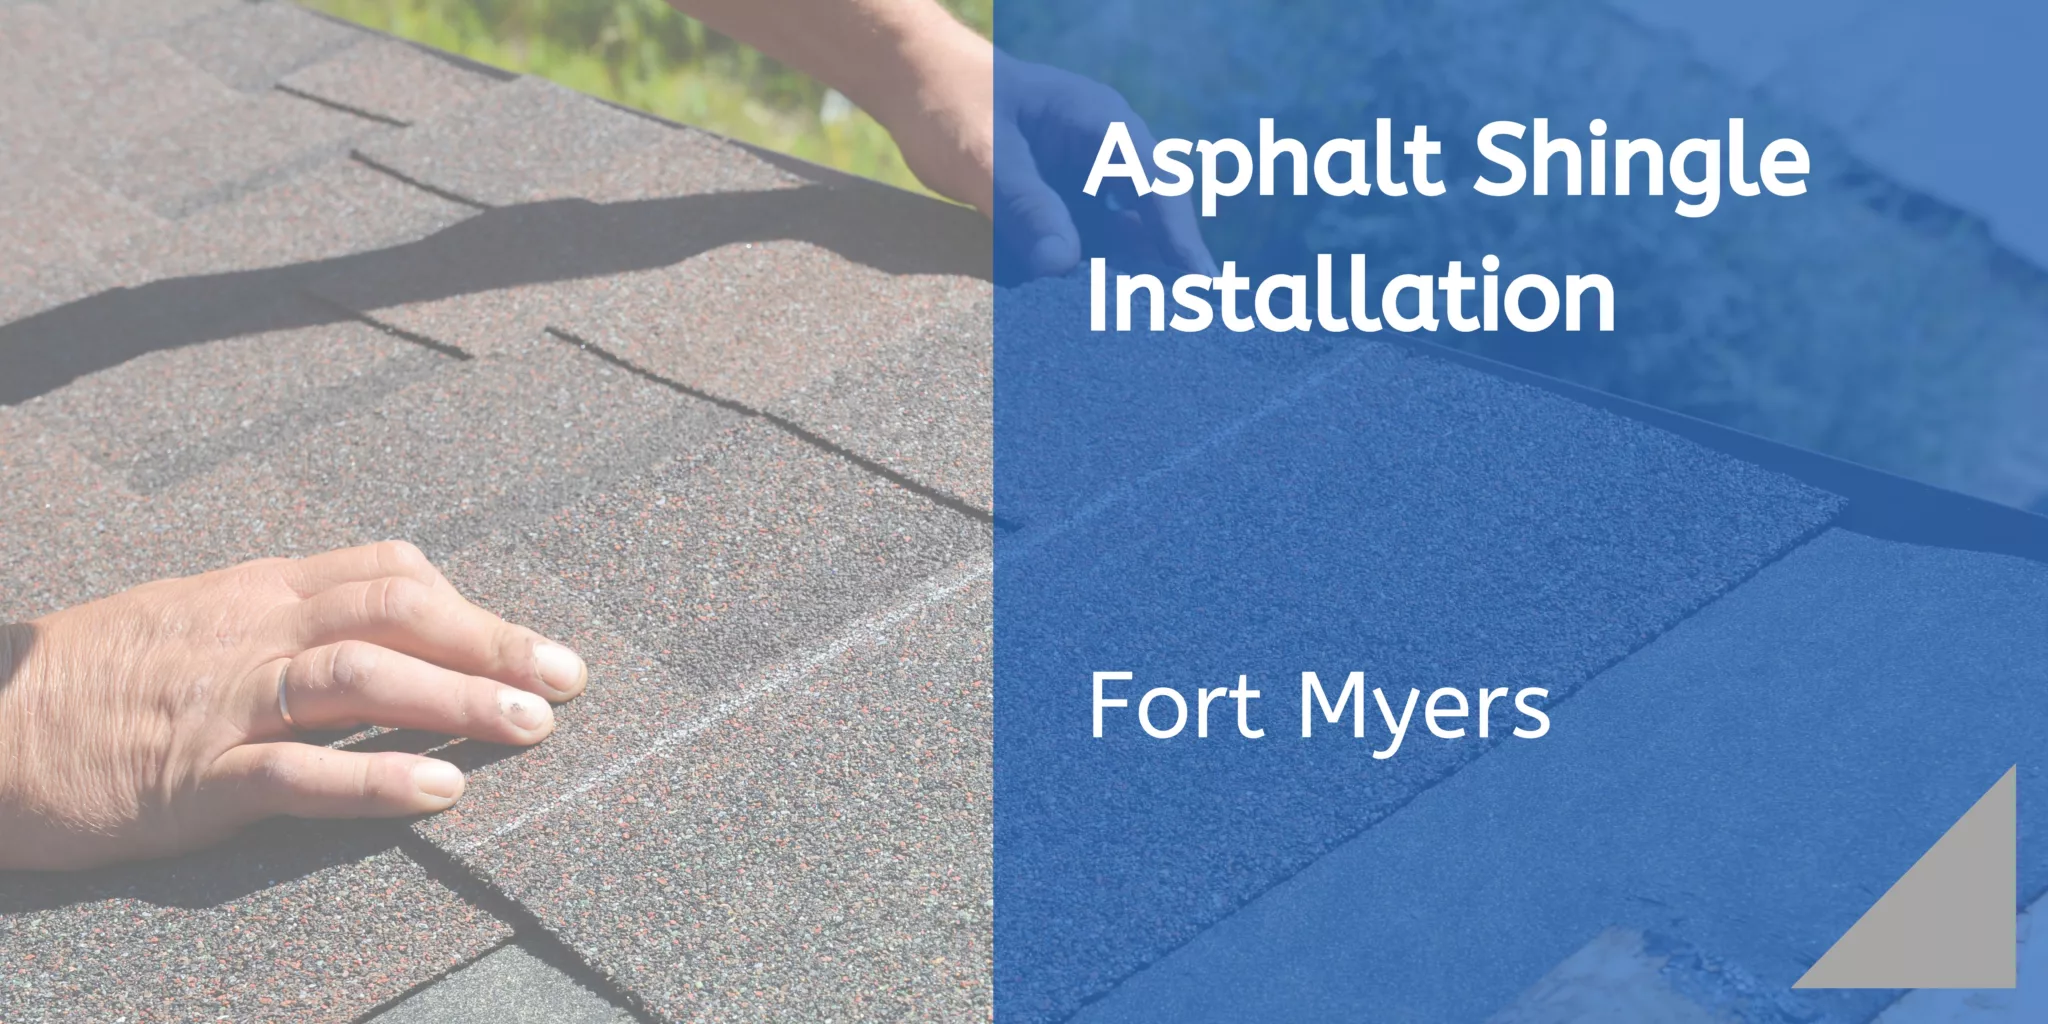 Asphalt shingle installation Fort Myers